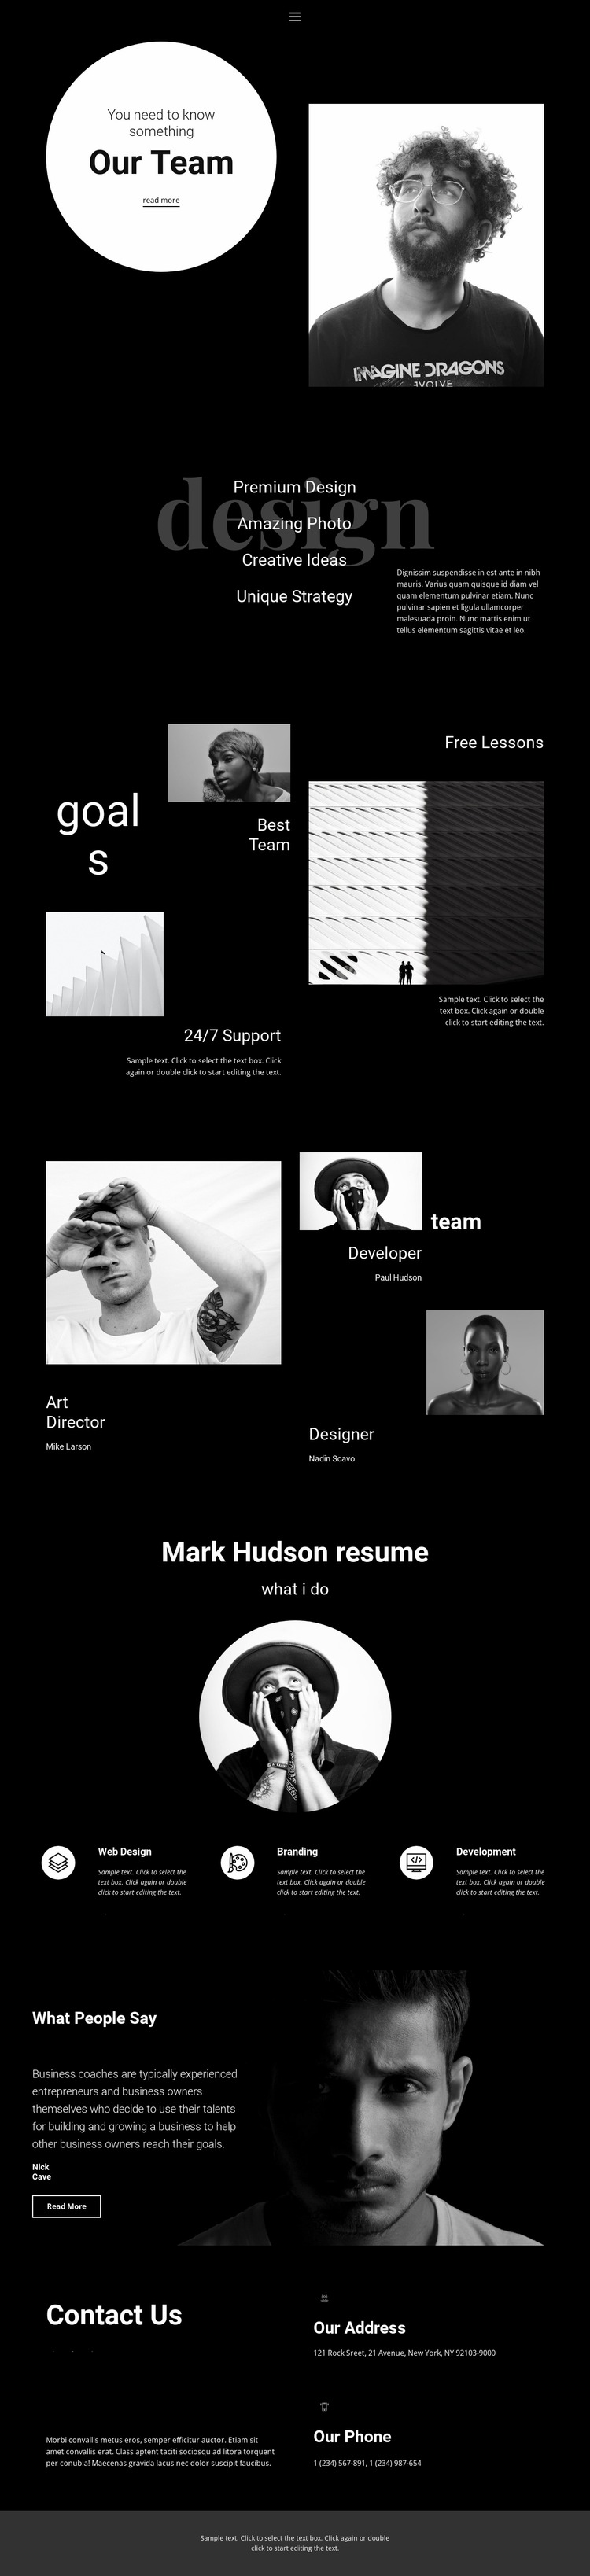 Design and development team Website Mockup